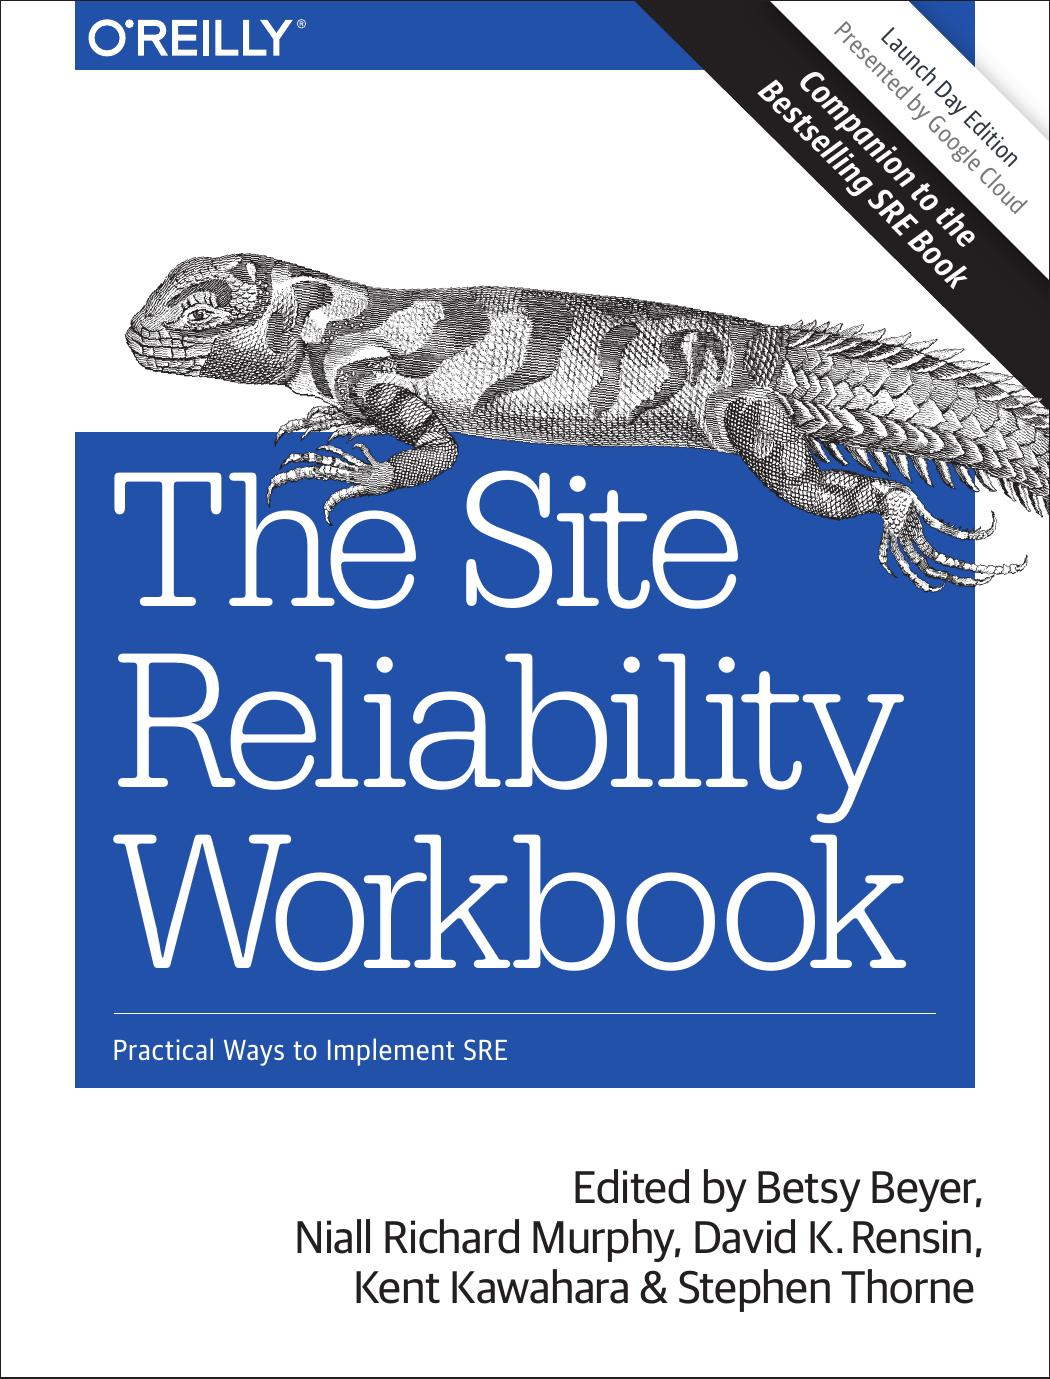 The Site Reliability Workbook